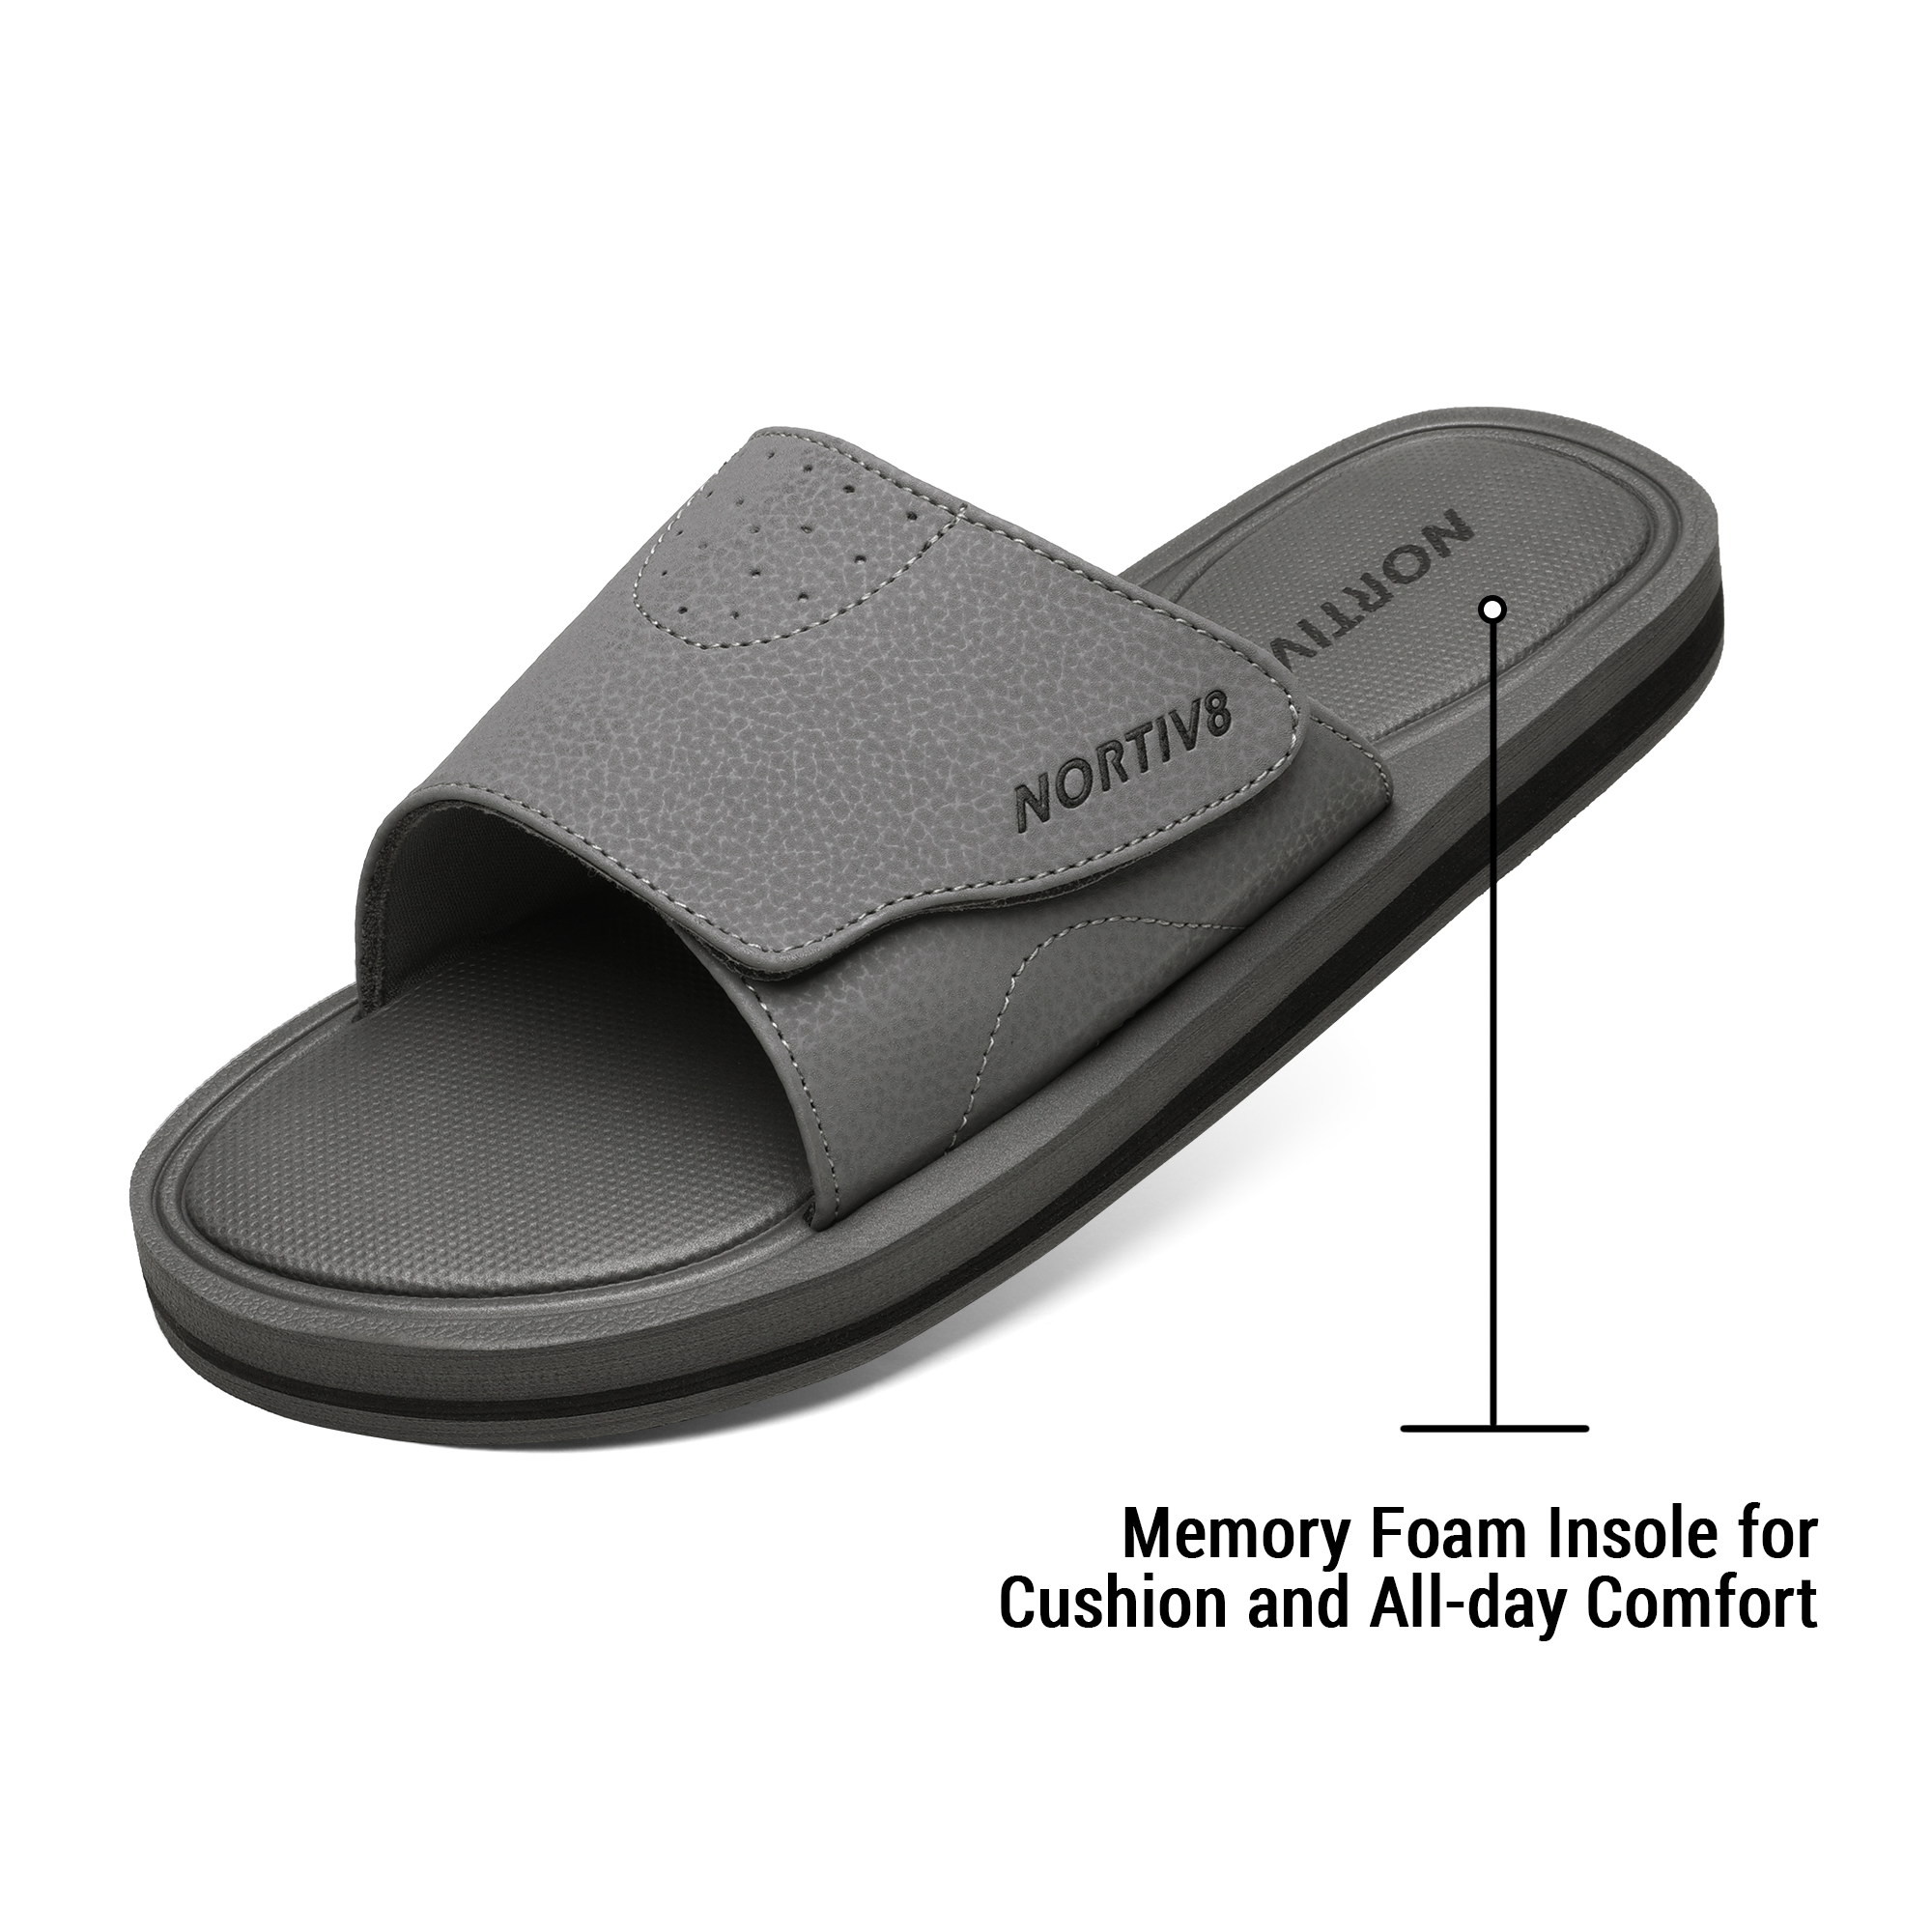 Nortiv8 Men's Memory Foam Adjustable Slide Sandals Comfort Lightweight Summer Beach Sandals Shoes FUSION GREY Size 15 - image 2 of 5